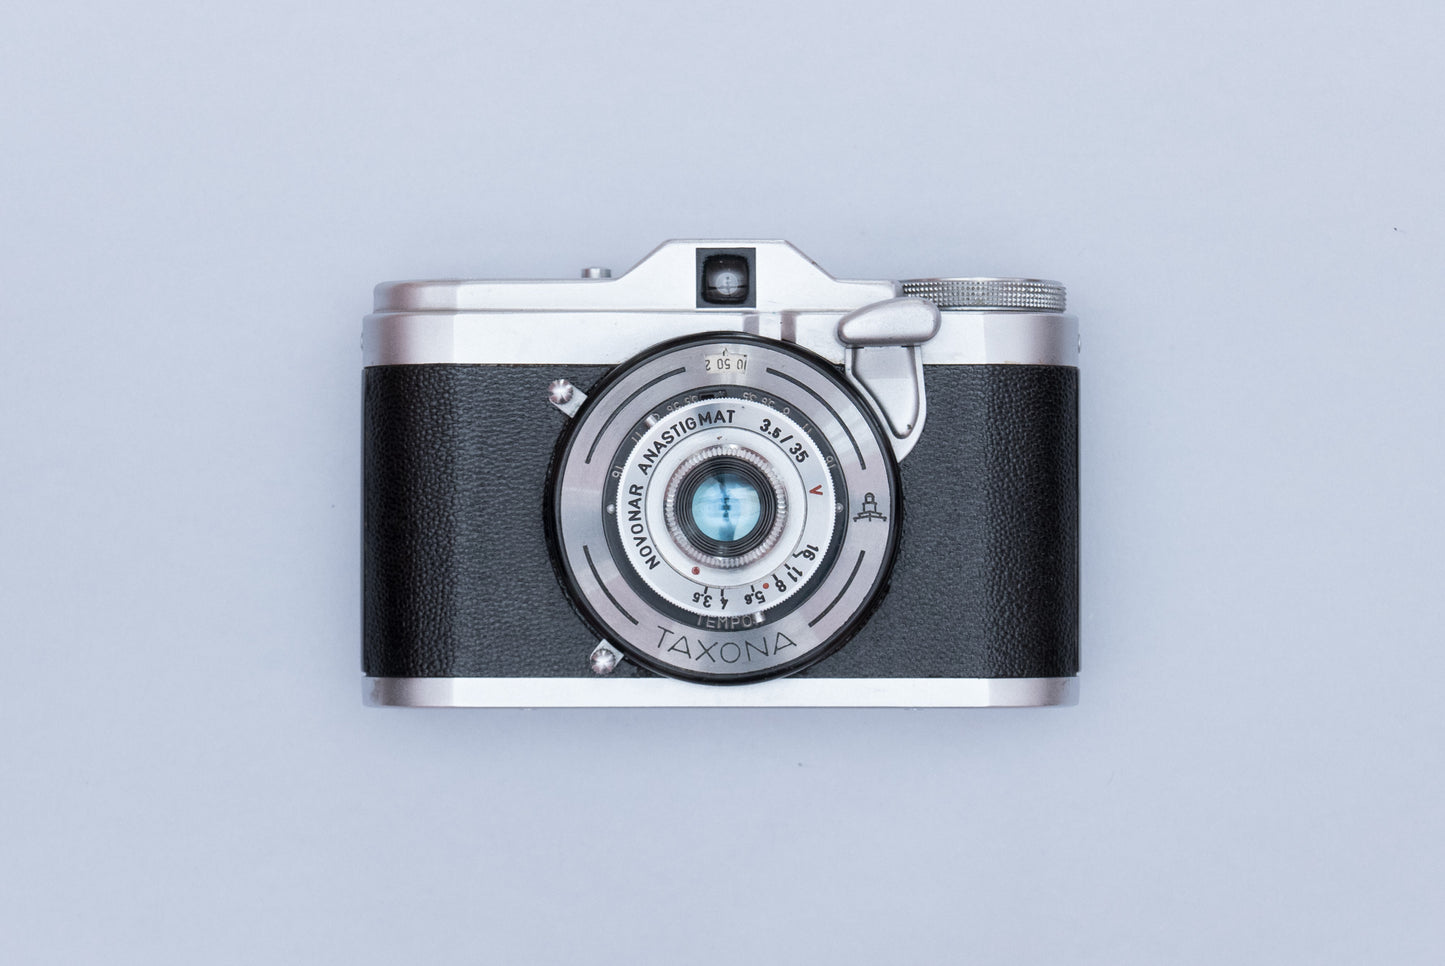 Zeiss Ikon Taxona Vintage 35mm Film Camera